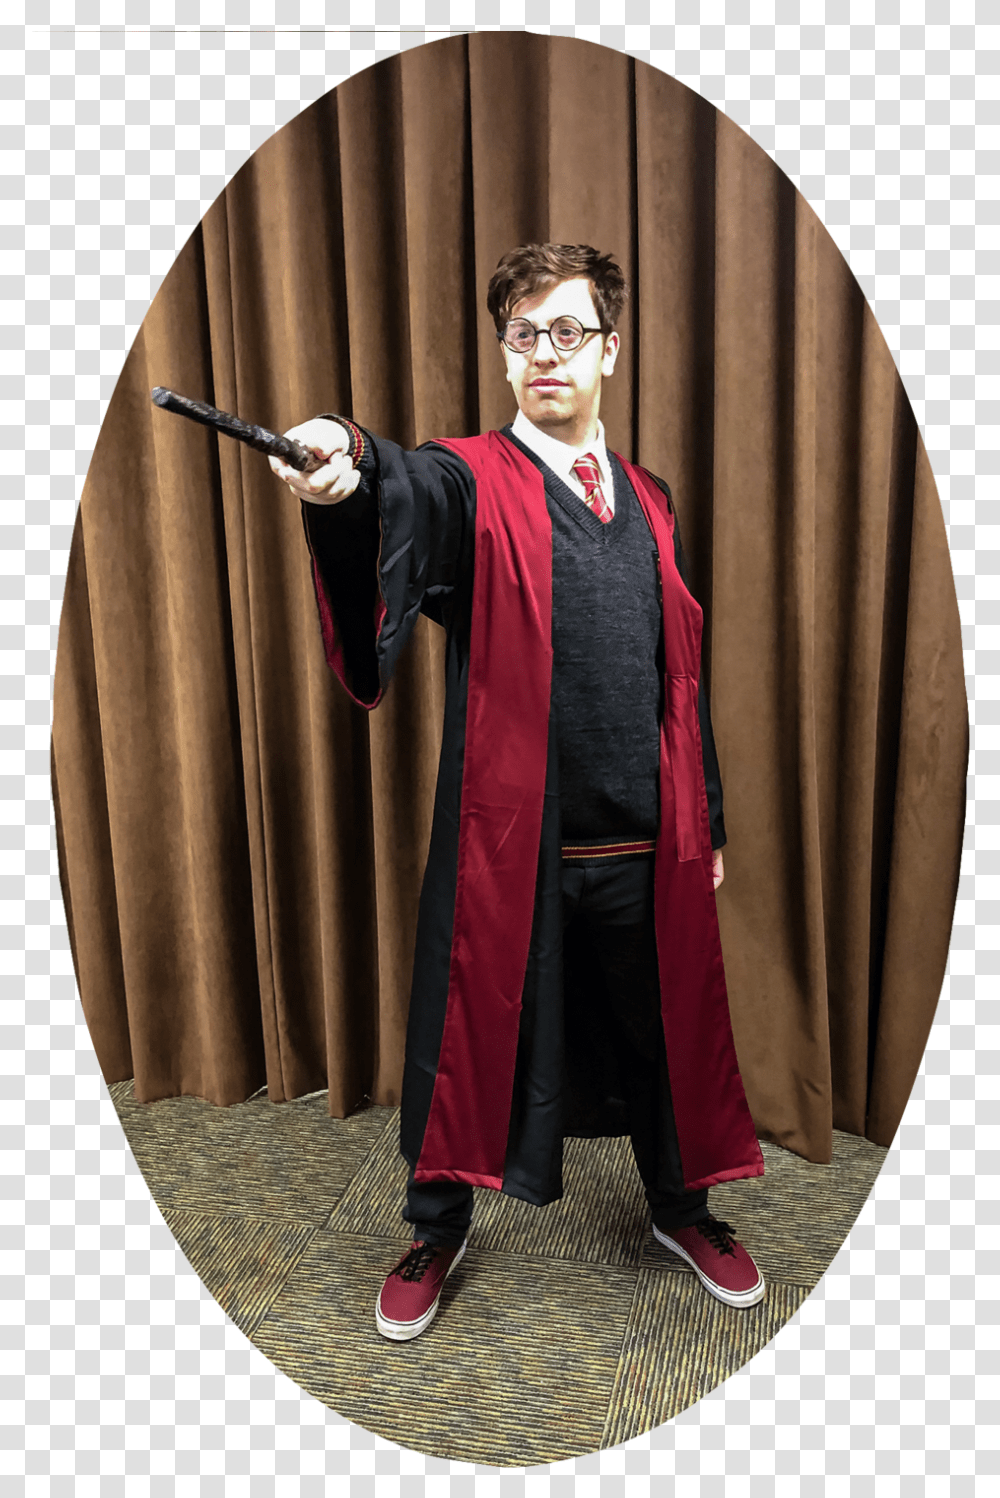 Ppbm Ac Harry Potter Gentleman, Shoe, Costume, Person Transparent Png